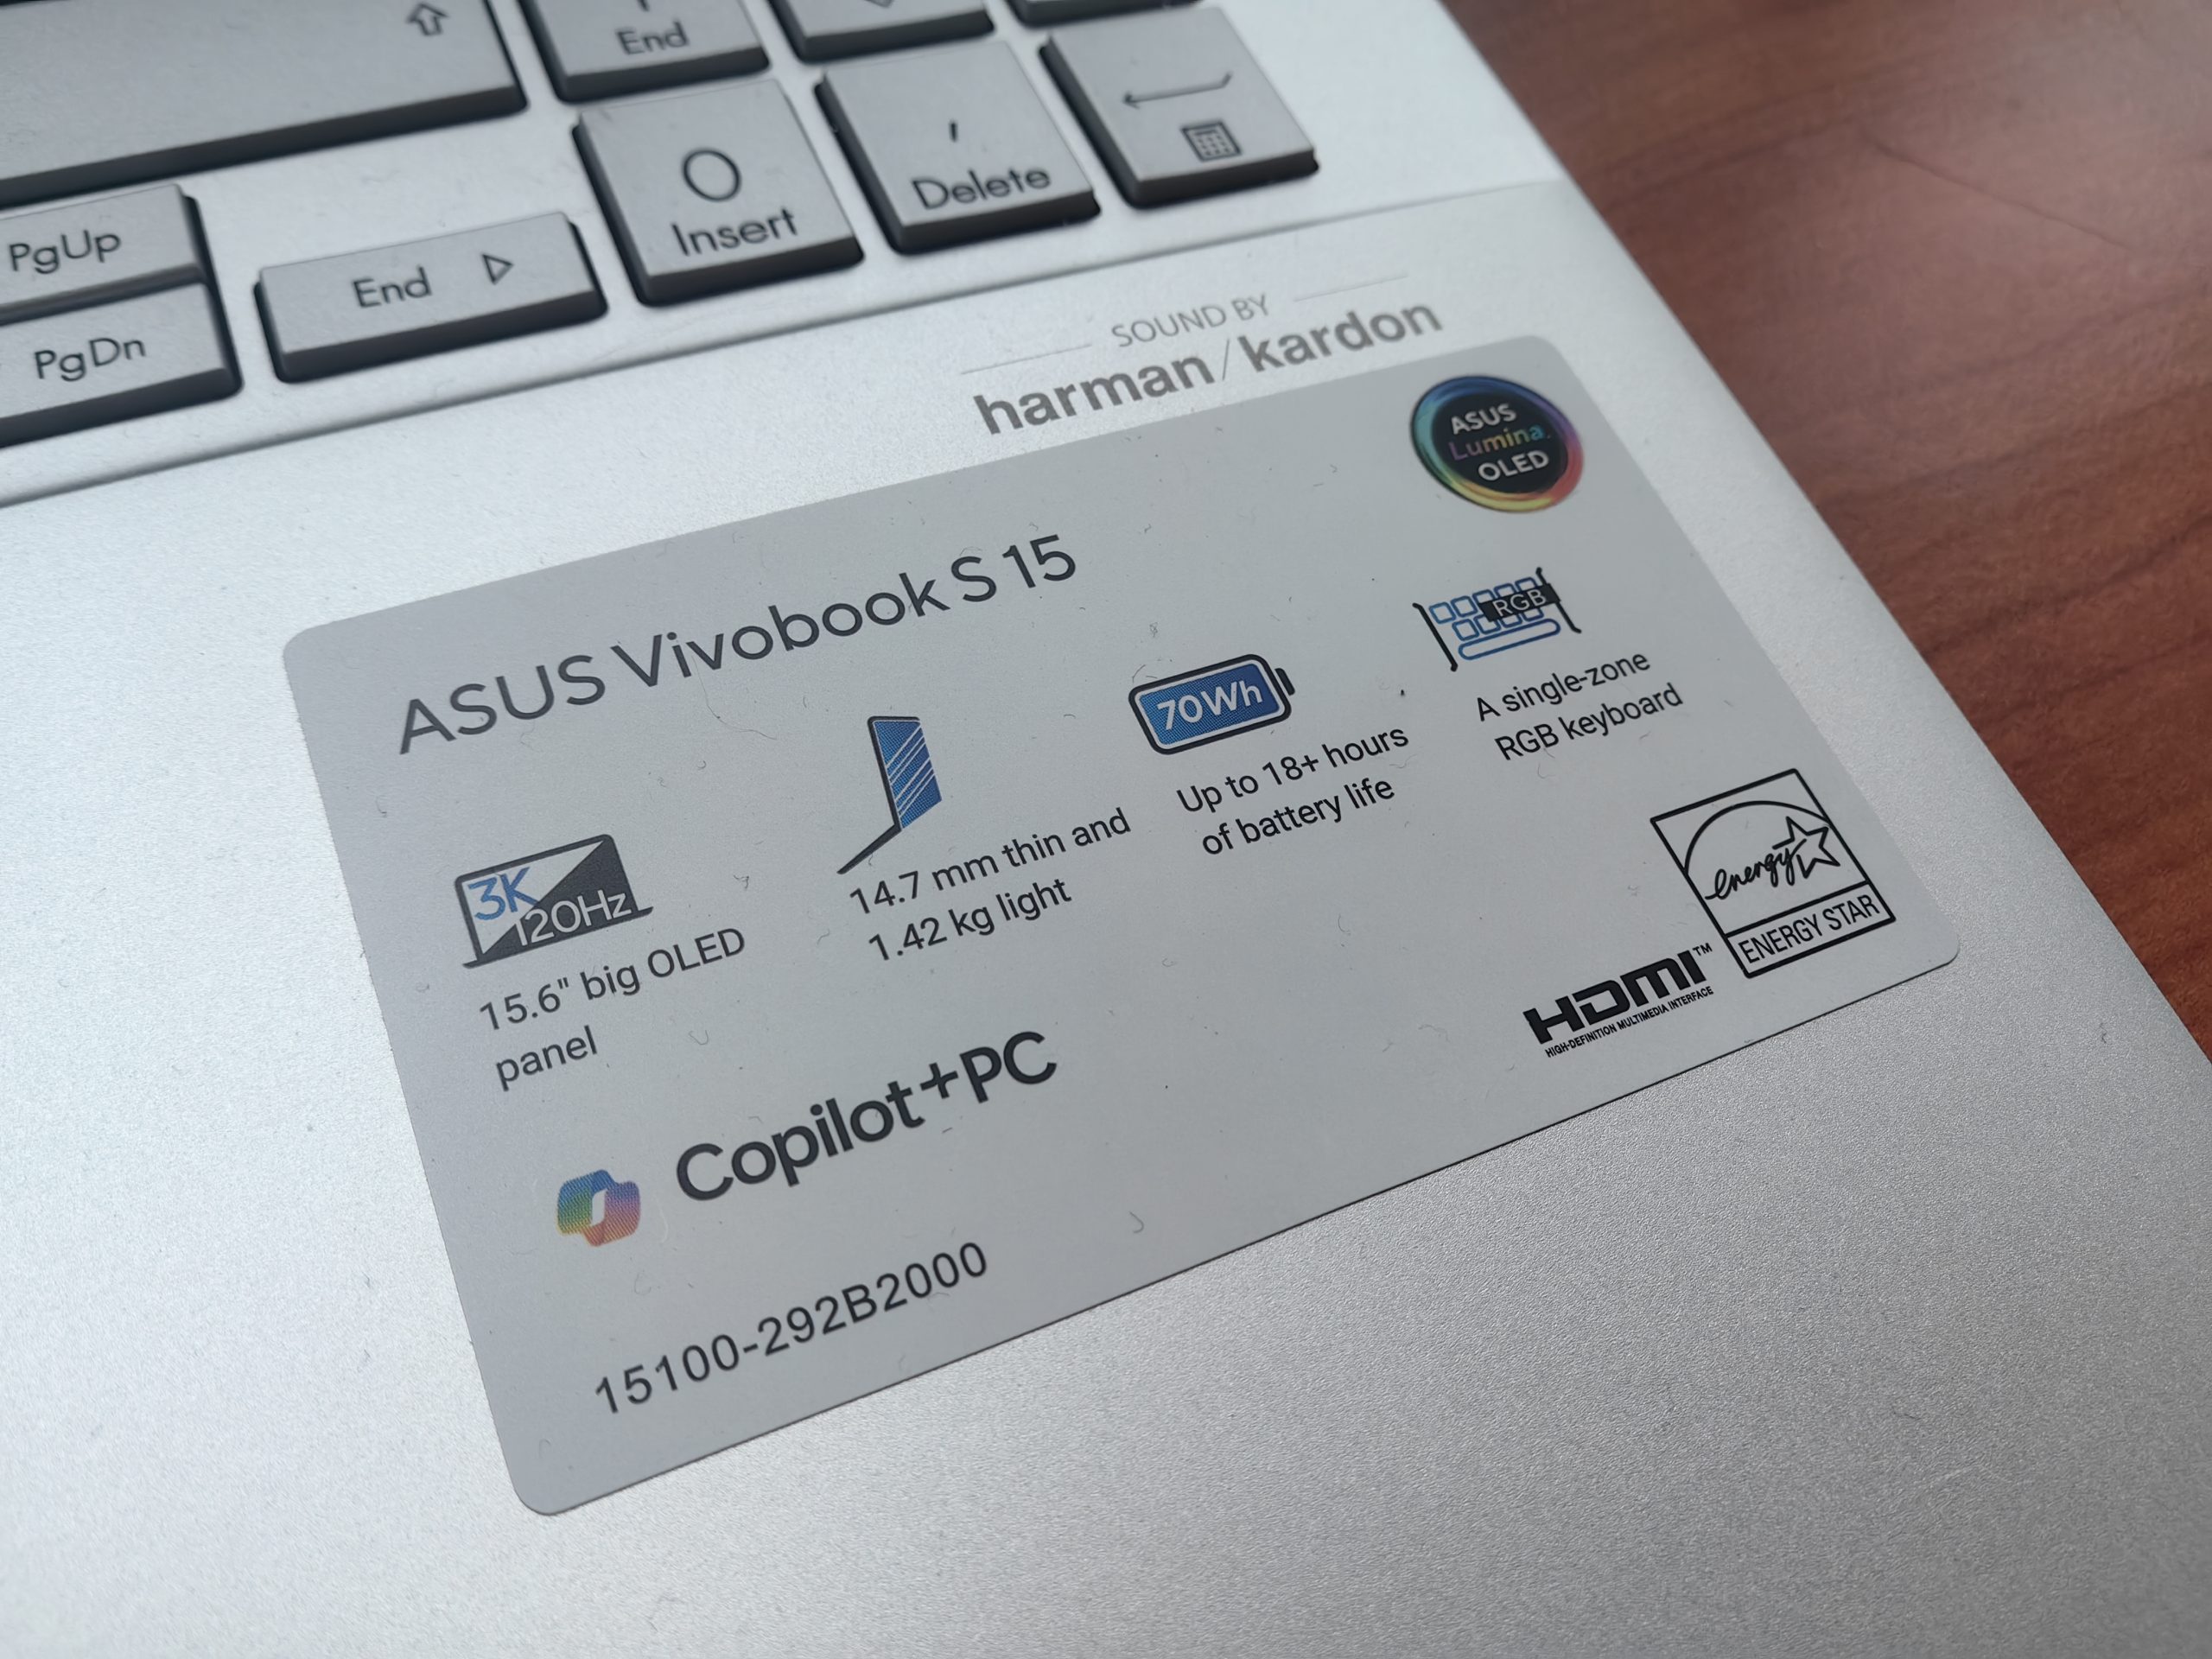 ASUS Vivobook S 15 es parte de la línea Copilot+